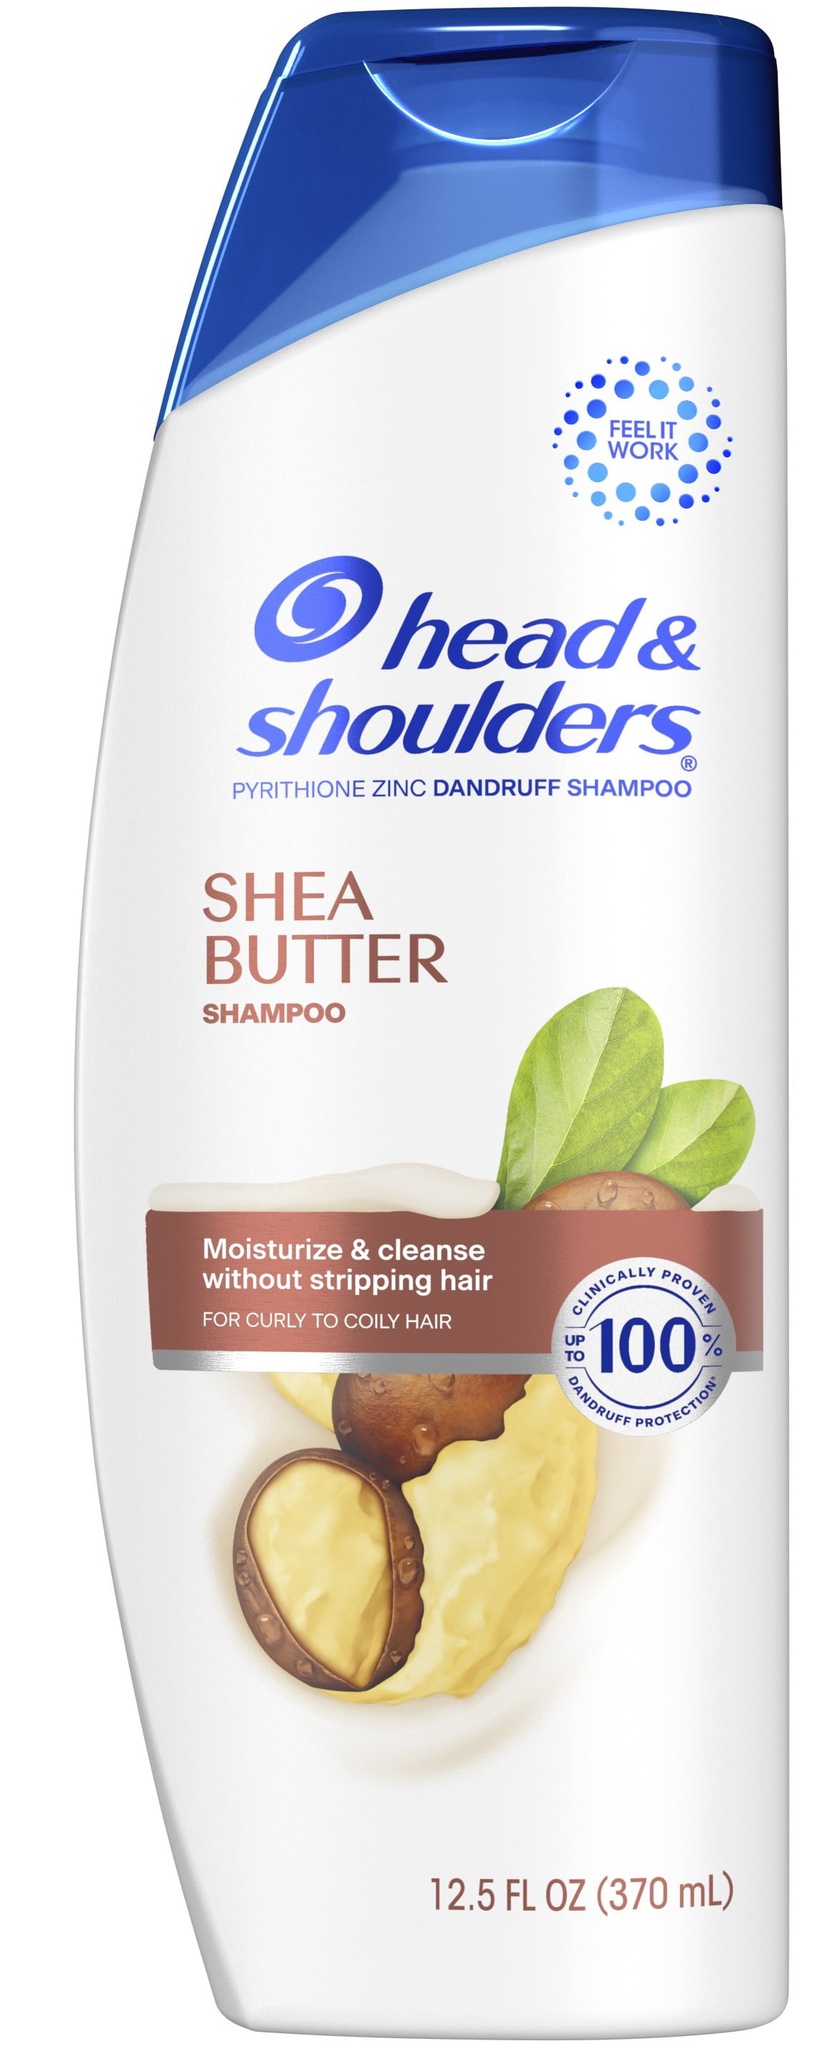 Head & Shoulders Shea Butter Dandruff Shampoo